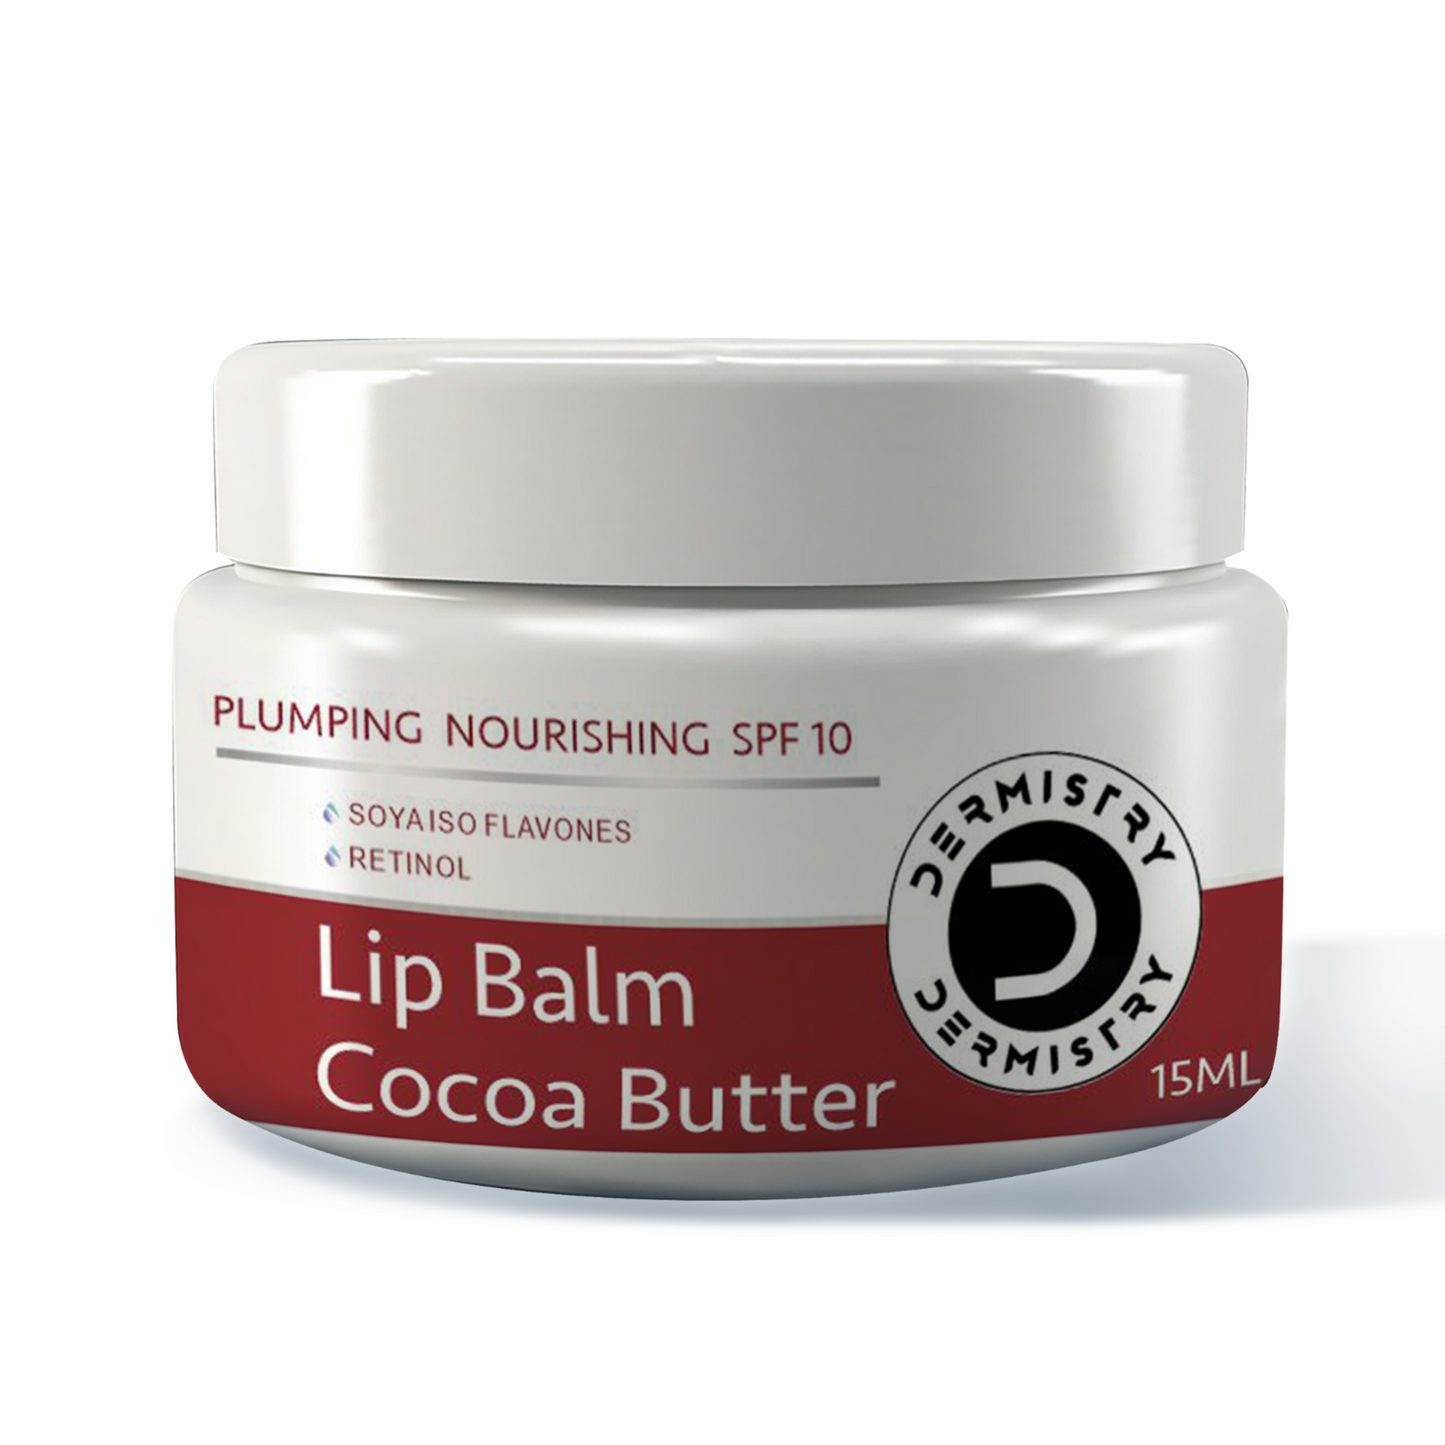 Dermistry Plumping Nourishing SPF10 Lip Balm Cocoa Butter, 15ml